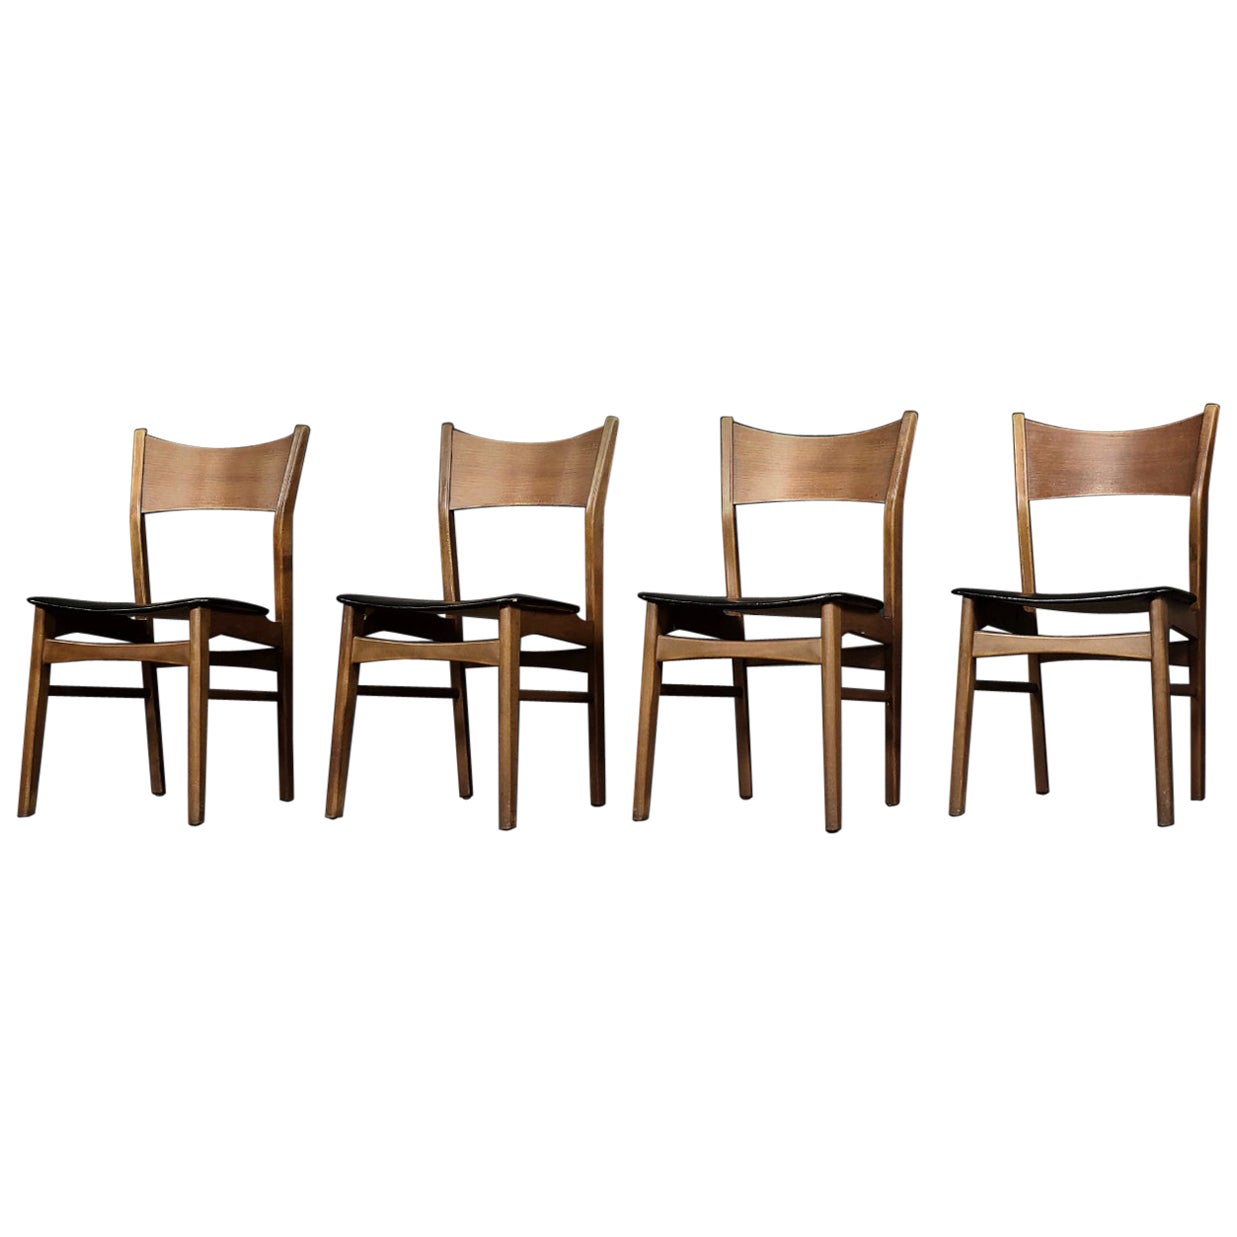 Set of 4 Vintage Mid-Century Modern Scandinavian Dining Chairs in Beech &Teak  For Sale